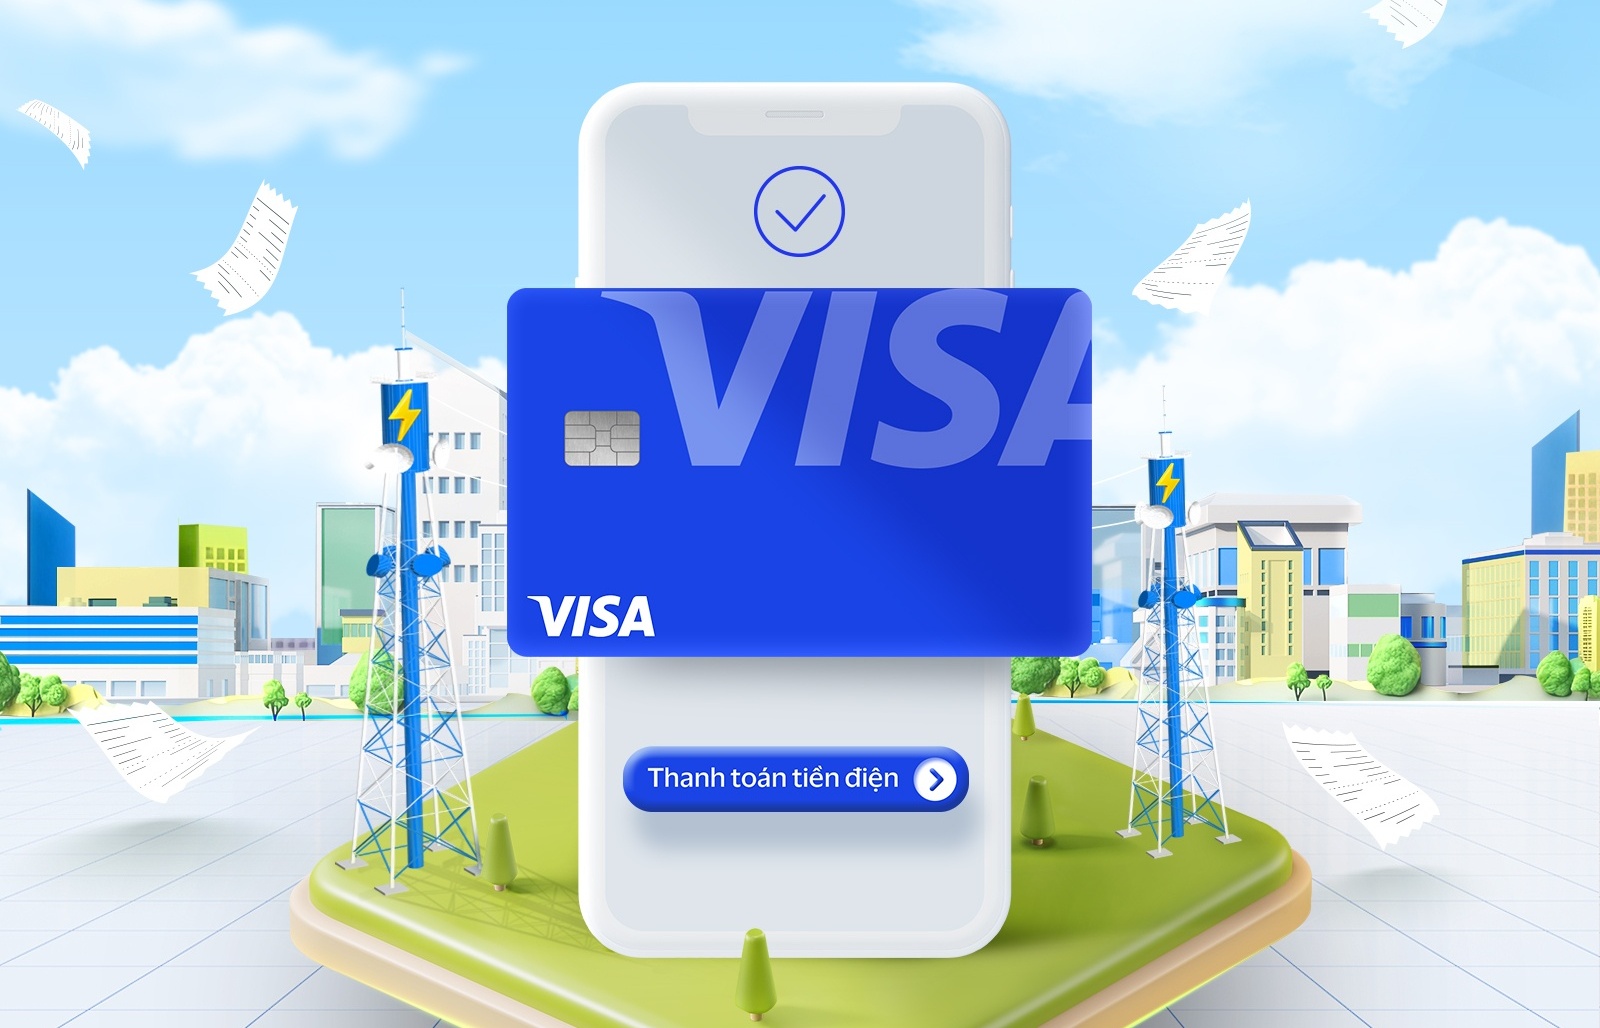 Visa expands digital payment acceptance for electricity bills in Vietnam